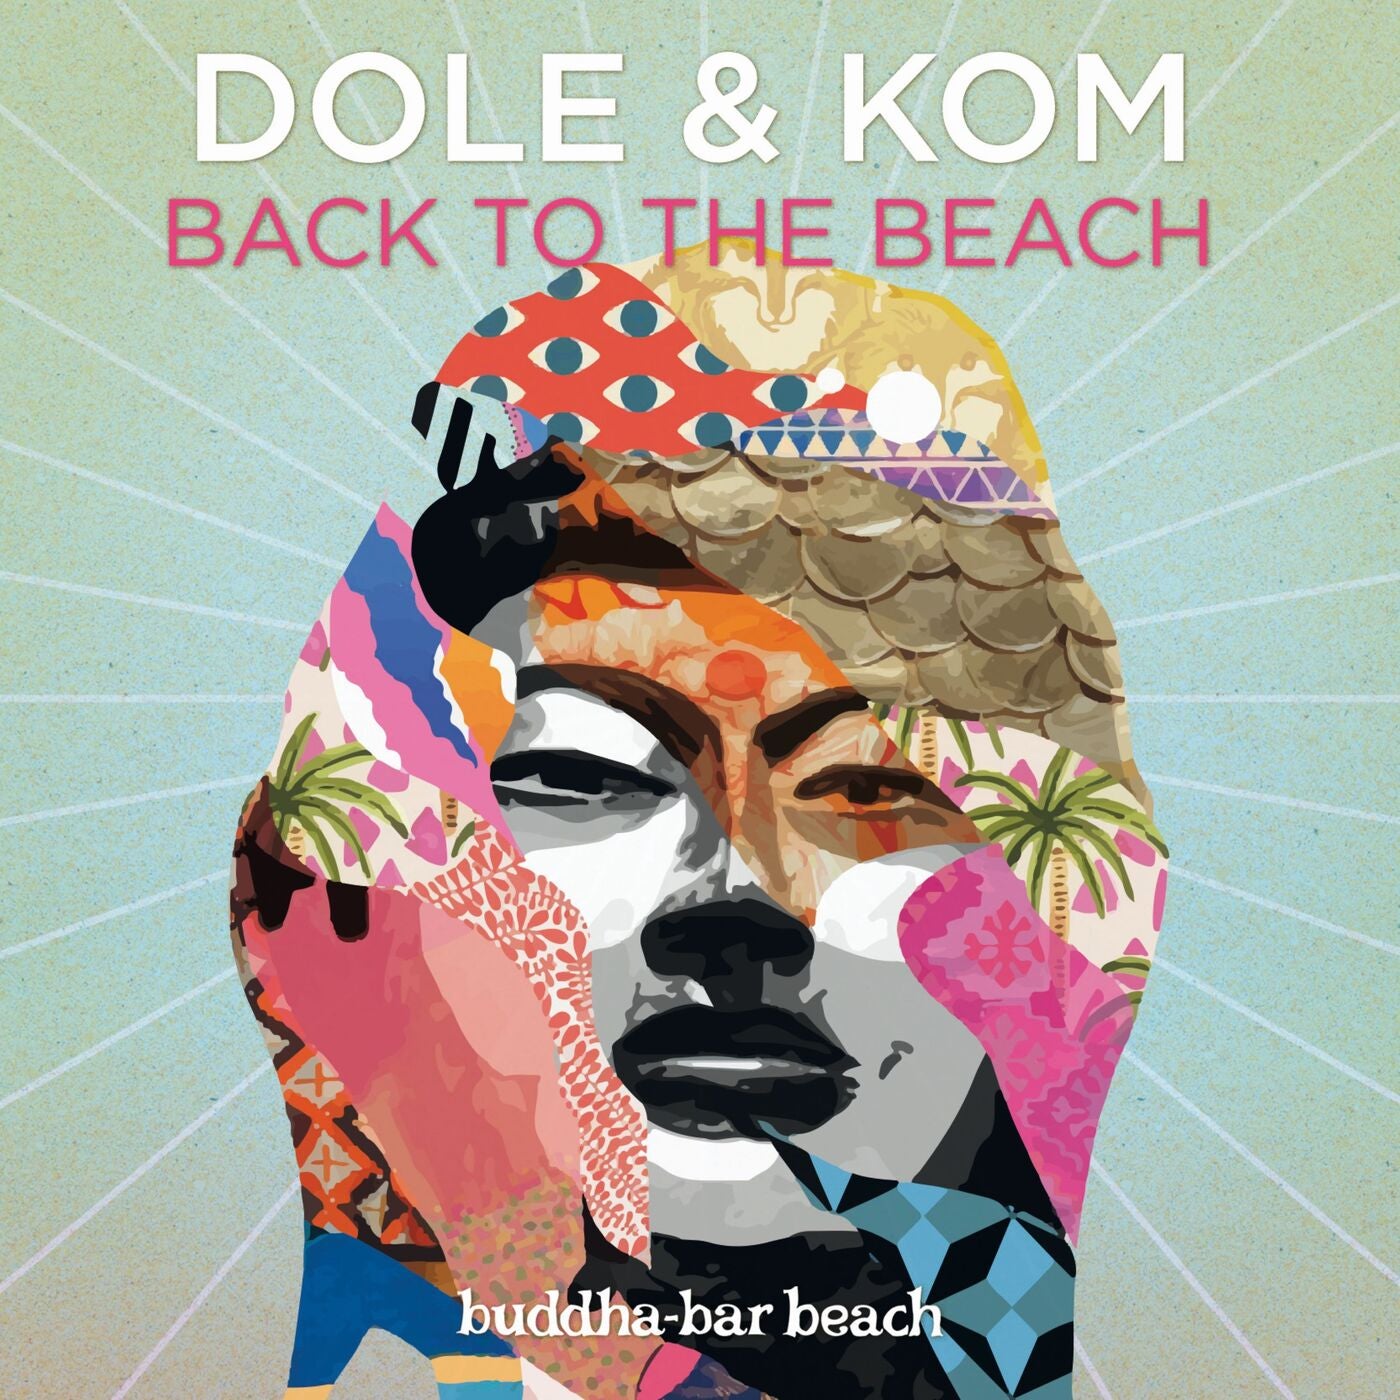 image cover: Dole & Kom, Buddha Bar - Back to the Beach on George V